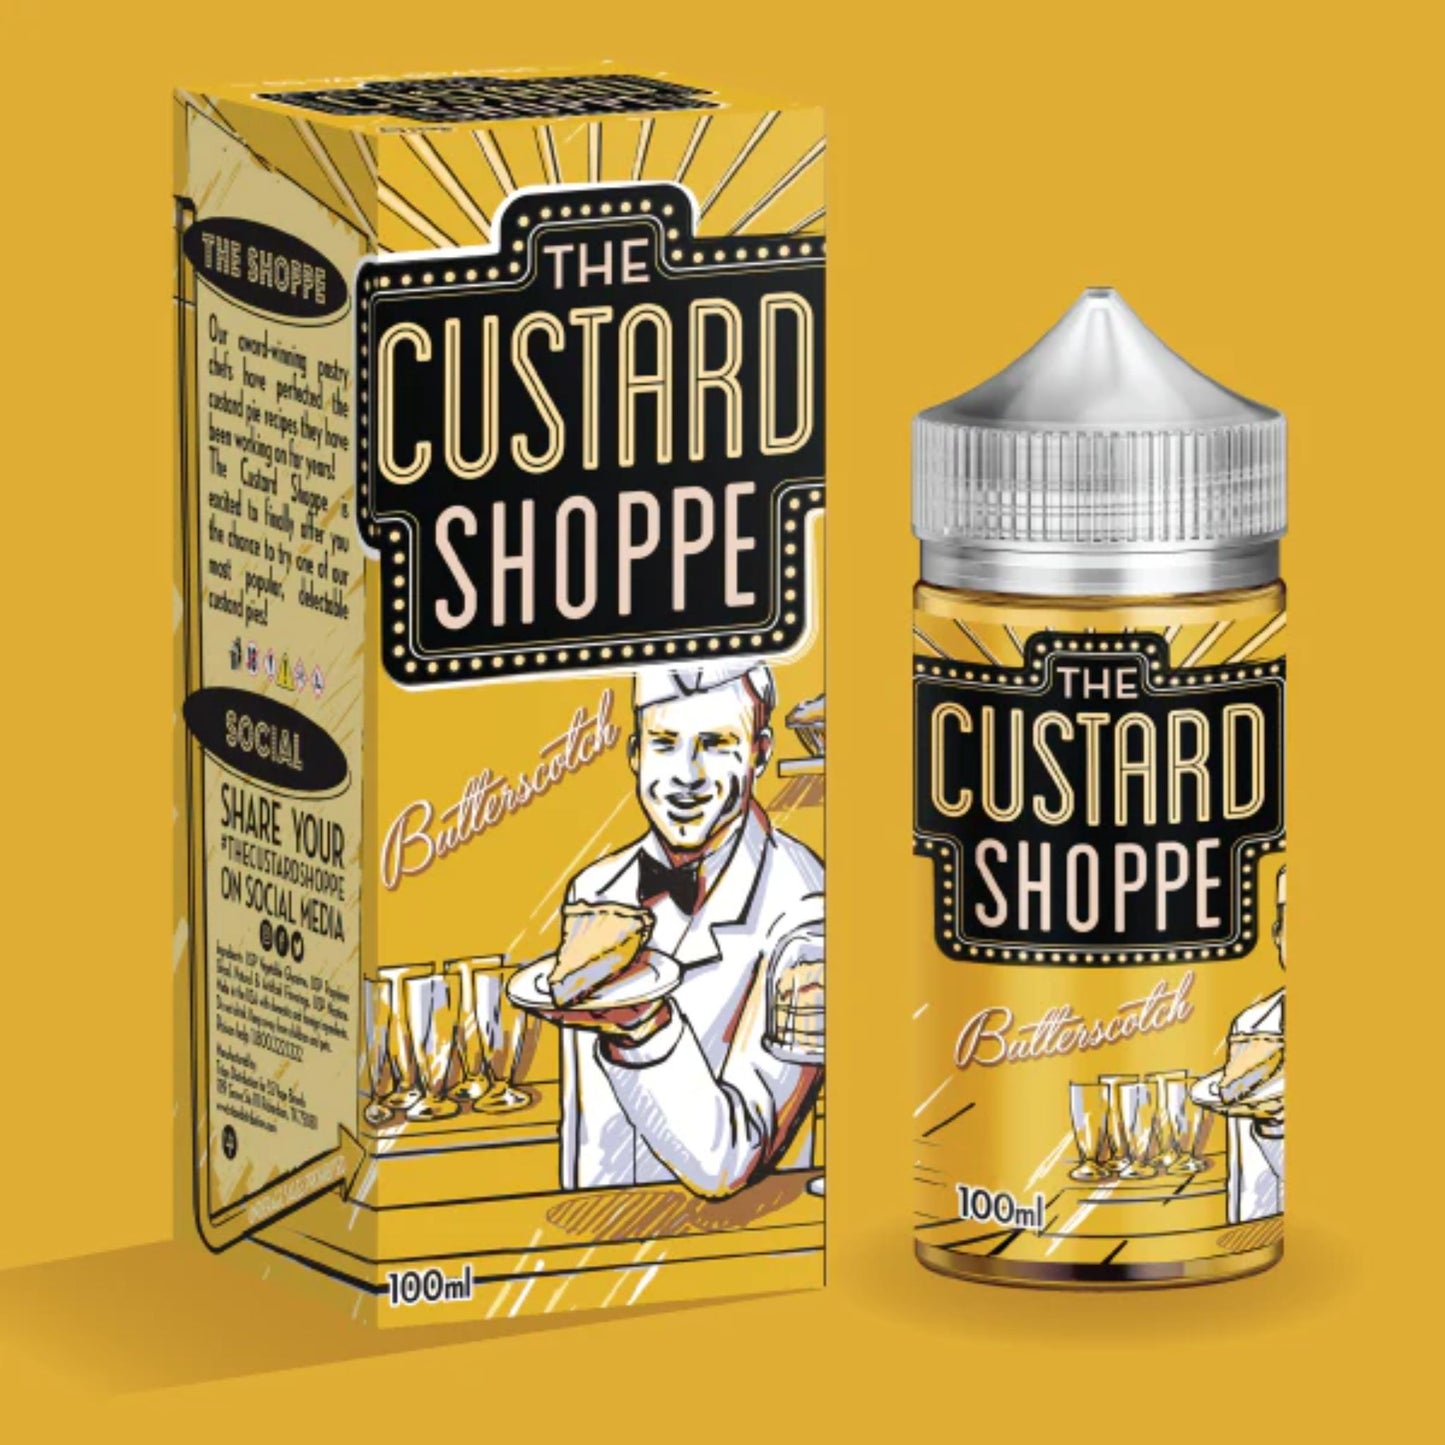 The Custard Shoppe | Butterscotch | 100ml bottle and box